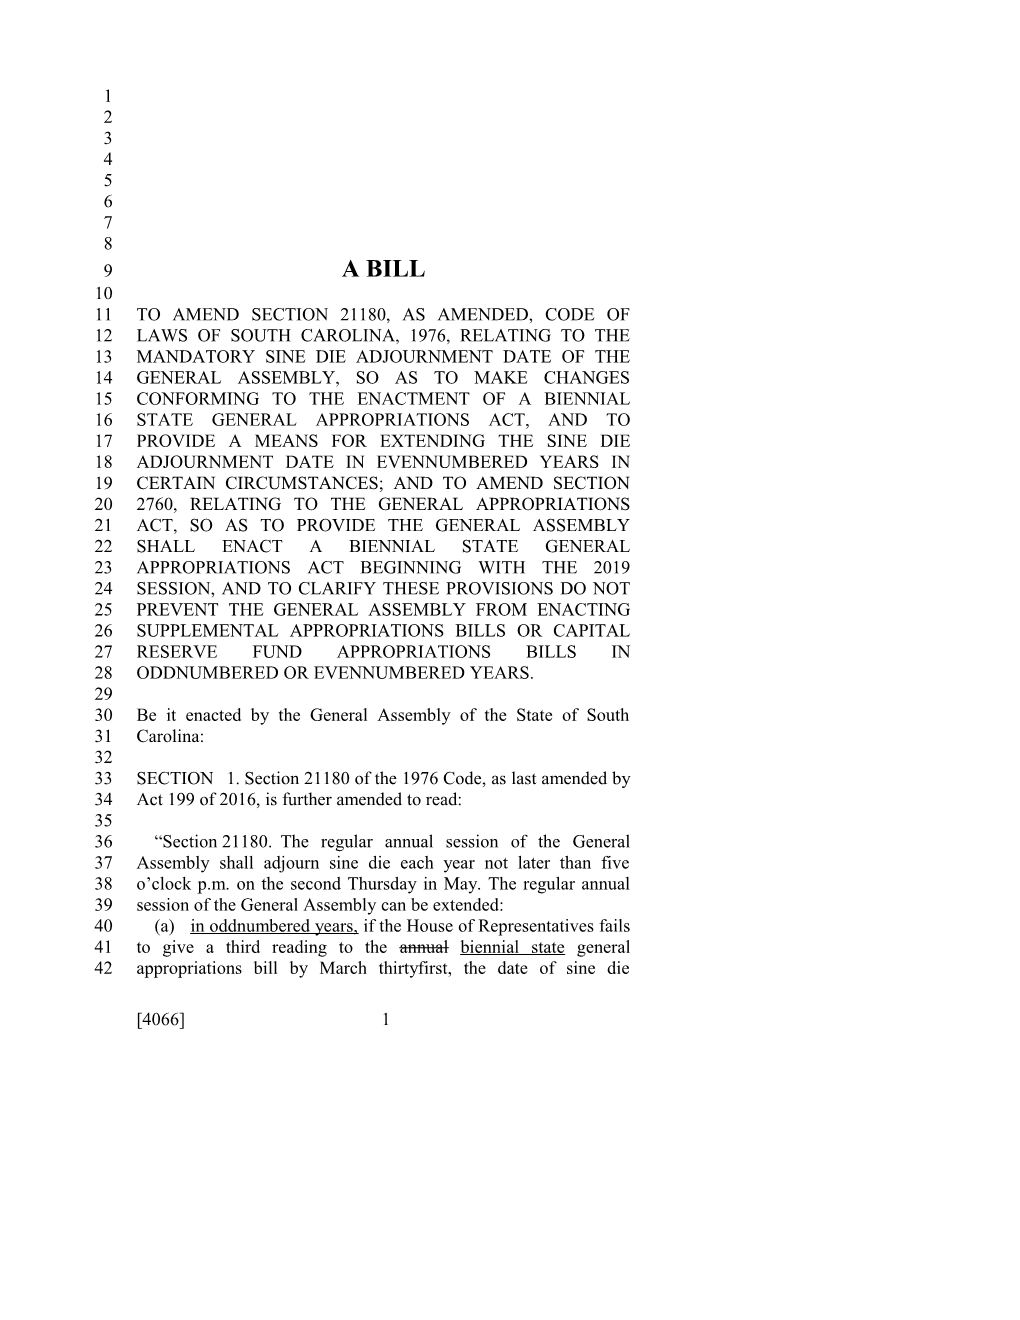 2017-2018 Bill 4066 Text of Previous Version (Mar. 28, 2017) - South Carolina Legislature Online